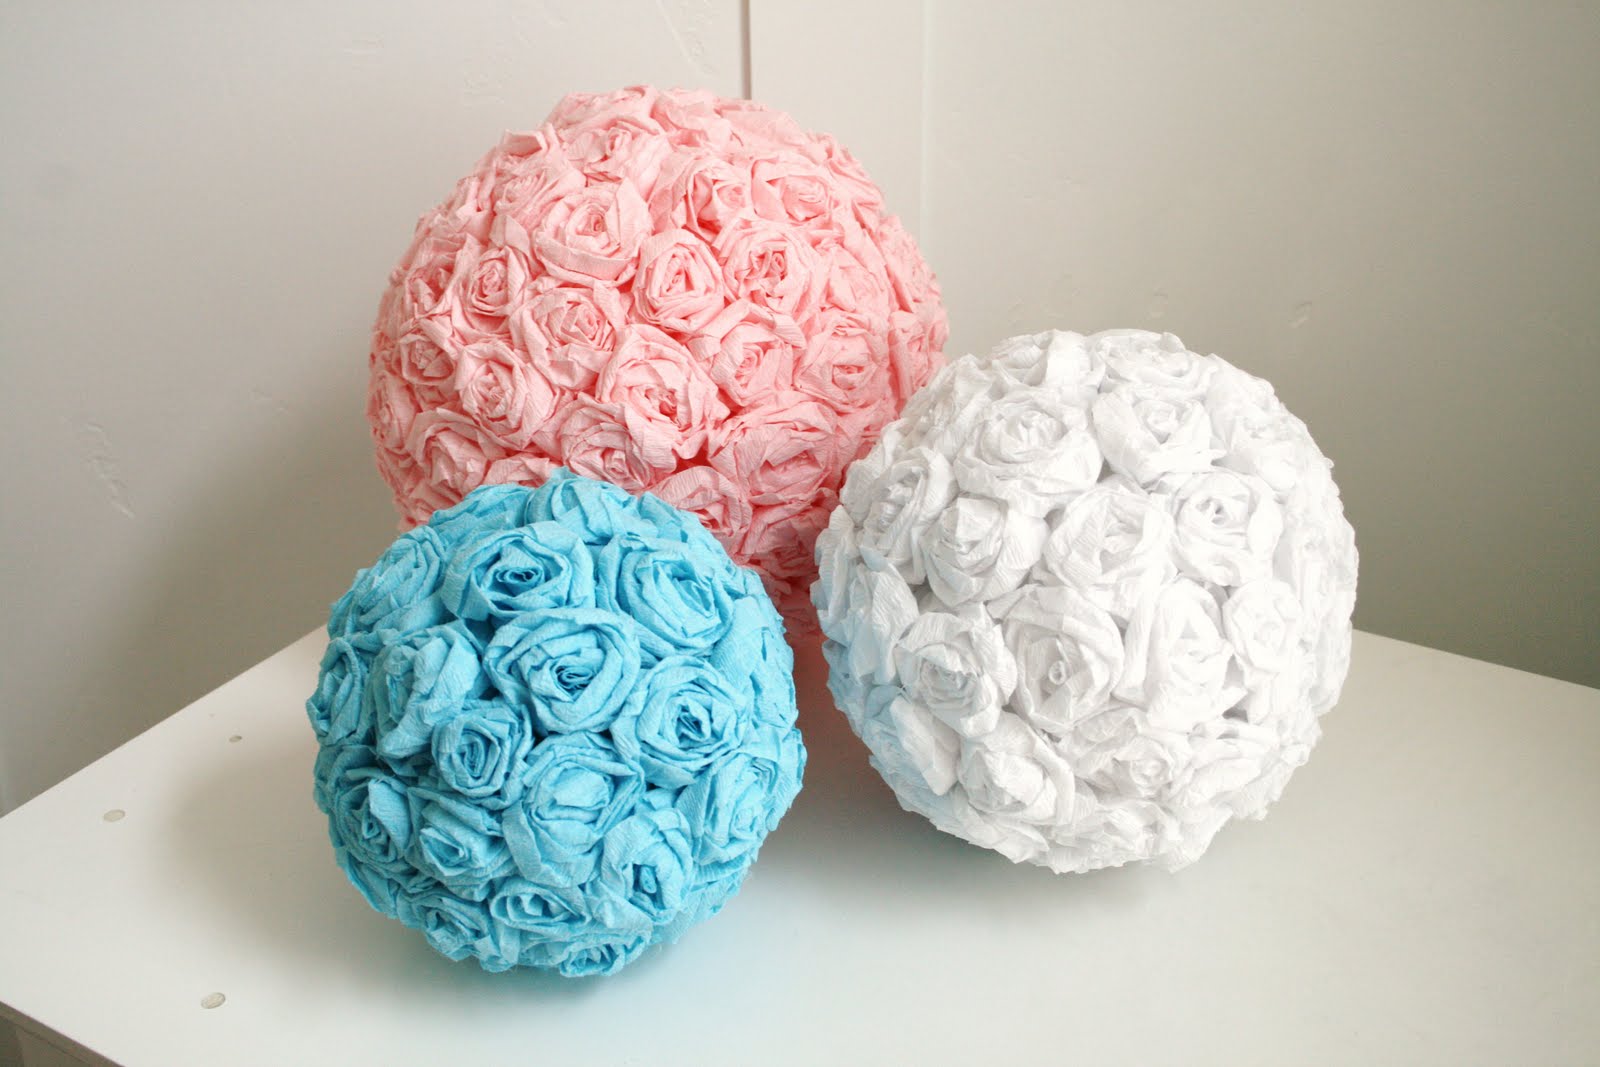 Tissue paper flower balls